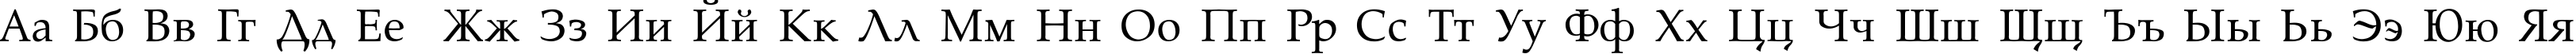 Пример написания русского алфавита шрифтом Palatino-Normal